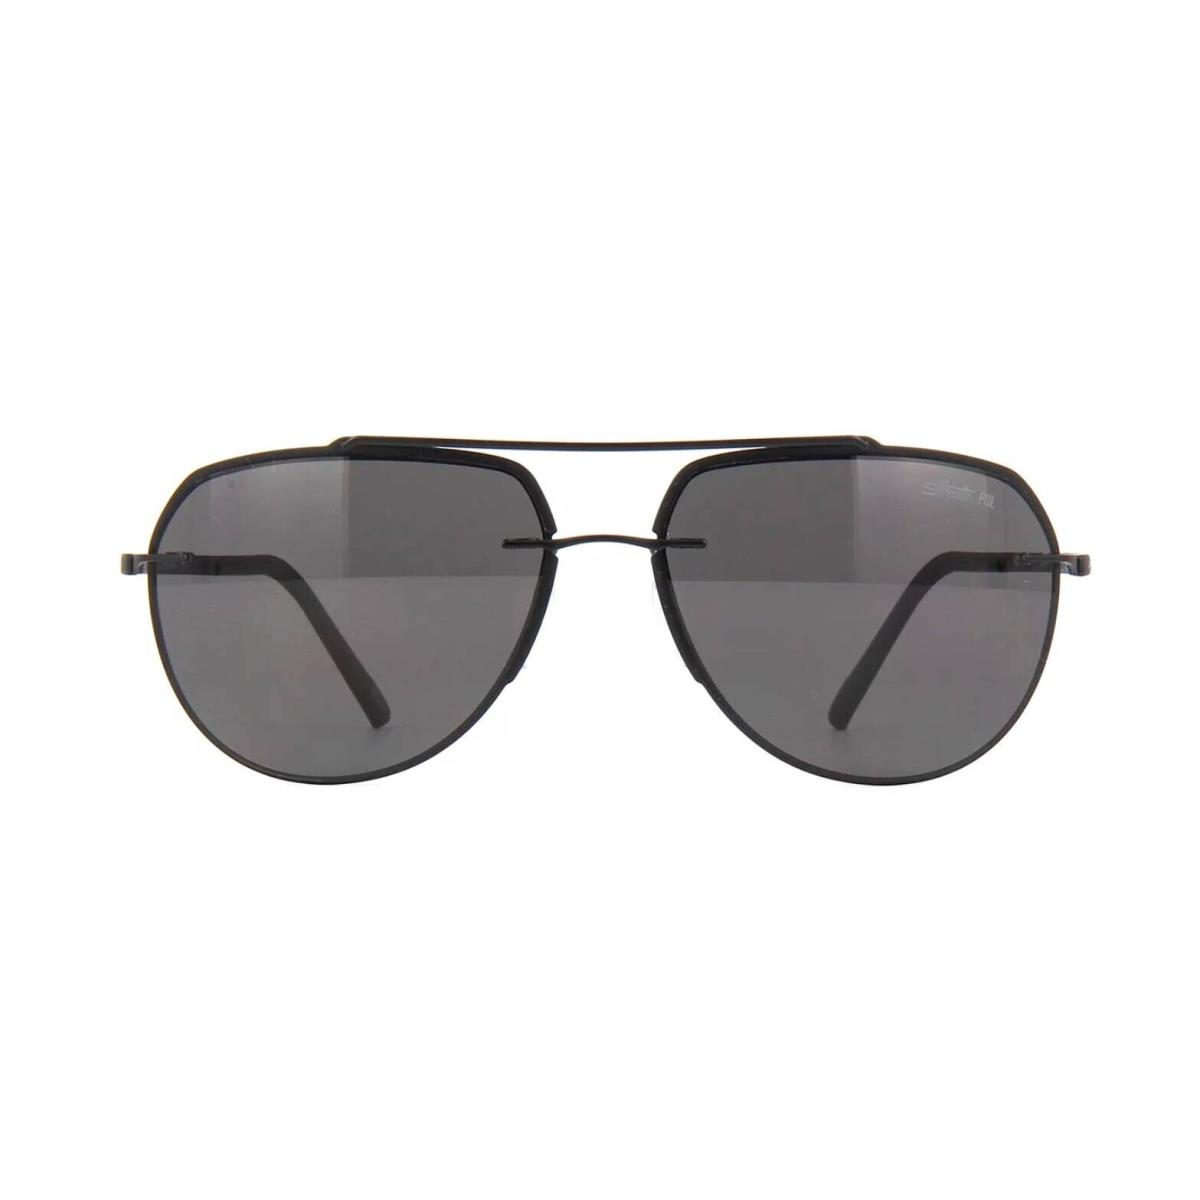 Silhouette Accent Shades 8719 Black/grey Polarized 9040 Sunglasses - Frame: Black, Lens: Grey Polarized